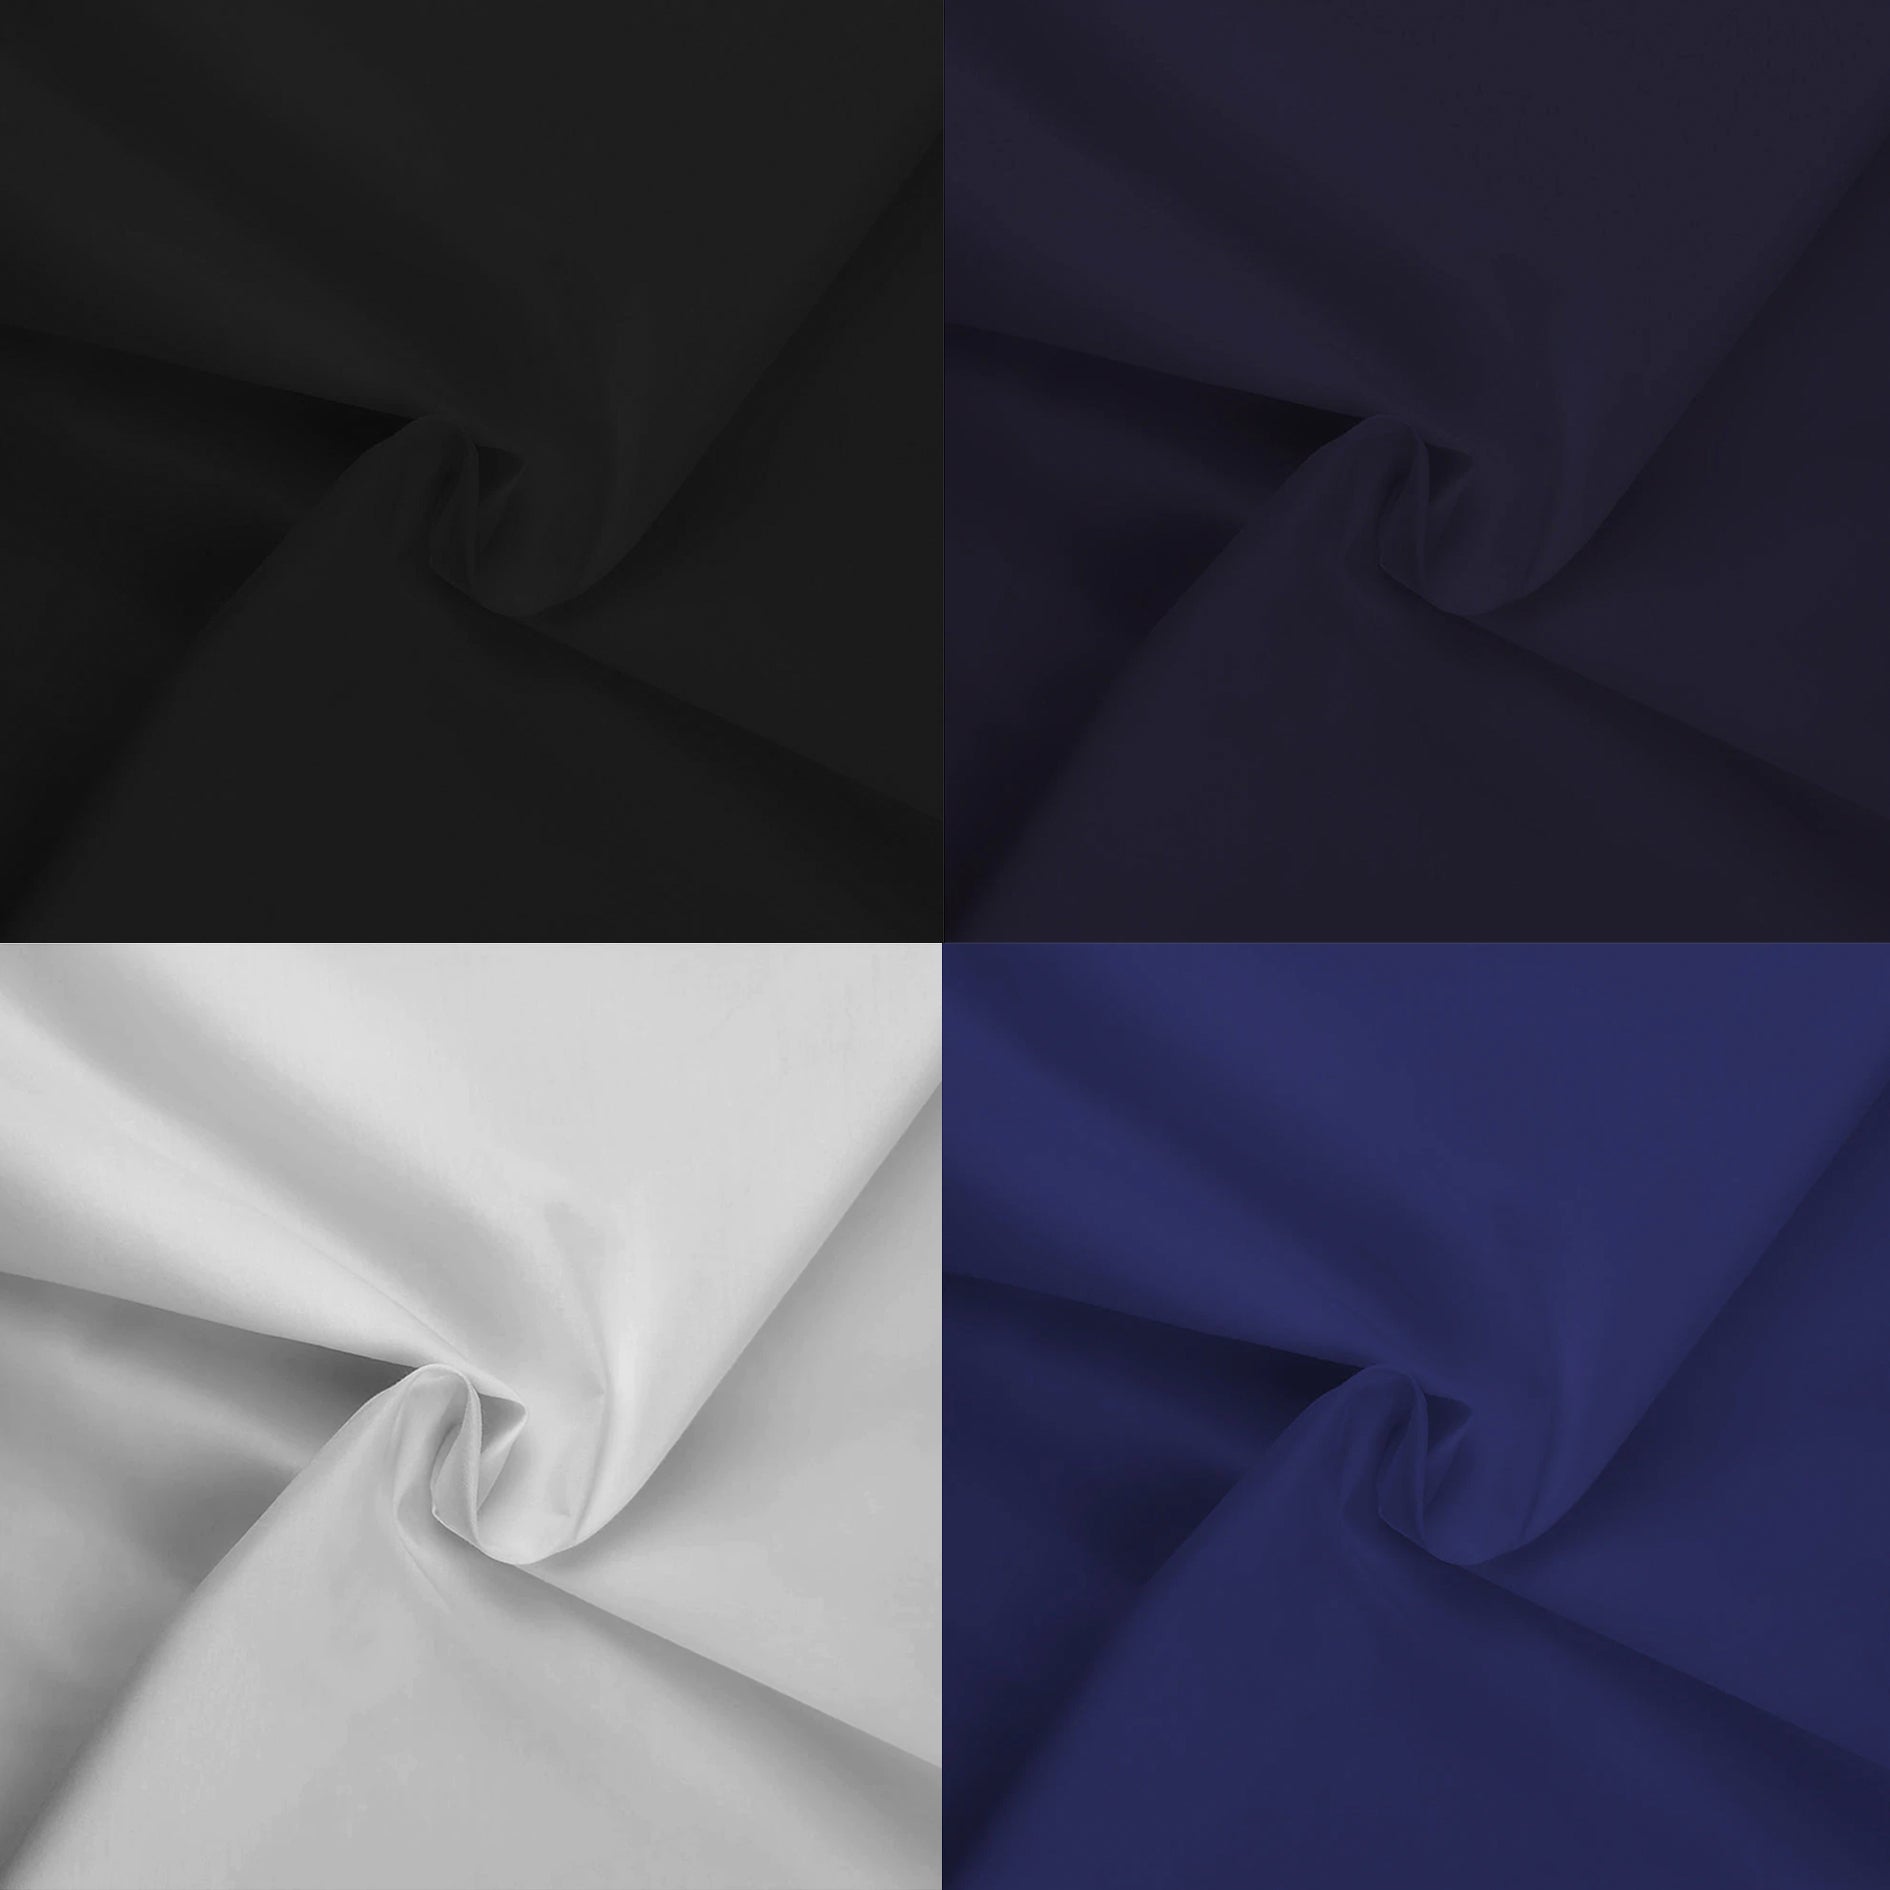 Broadcloth Fabric (Wide 60")